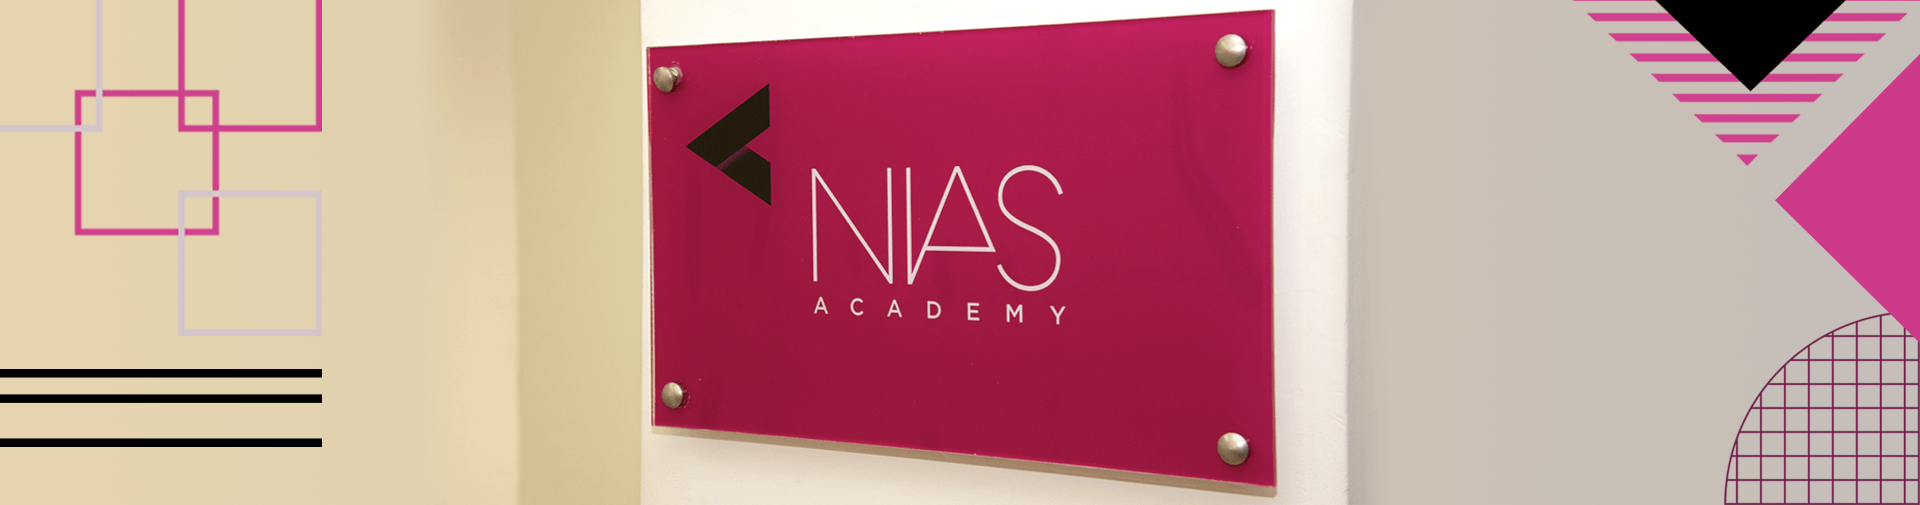 Nias Academy Signage